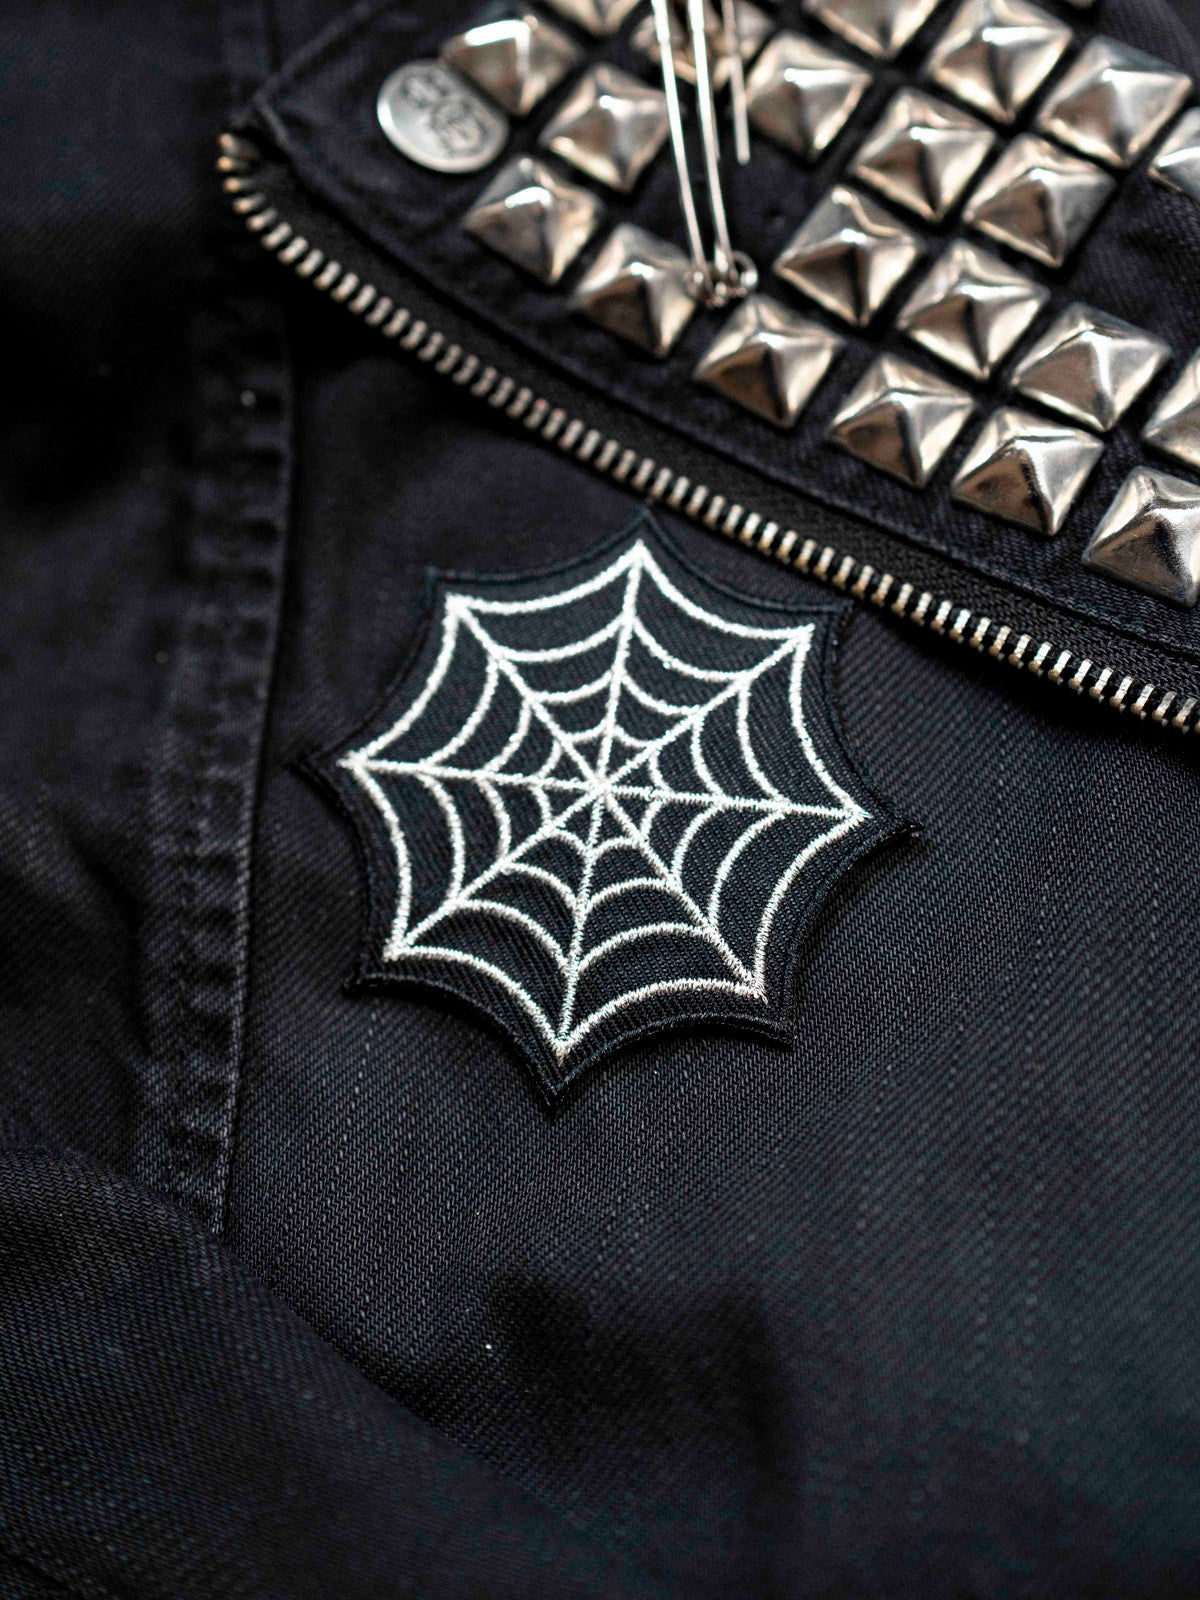 Pleasures Pleasures spider web denim jacket new | Grailed